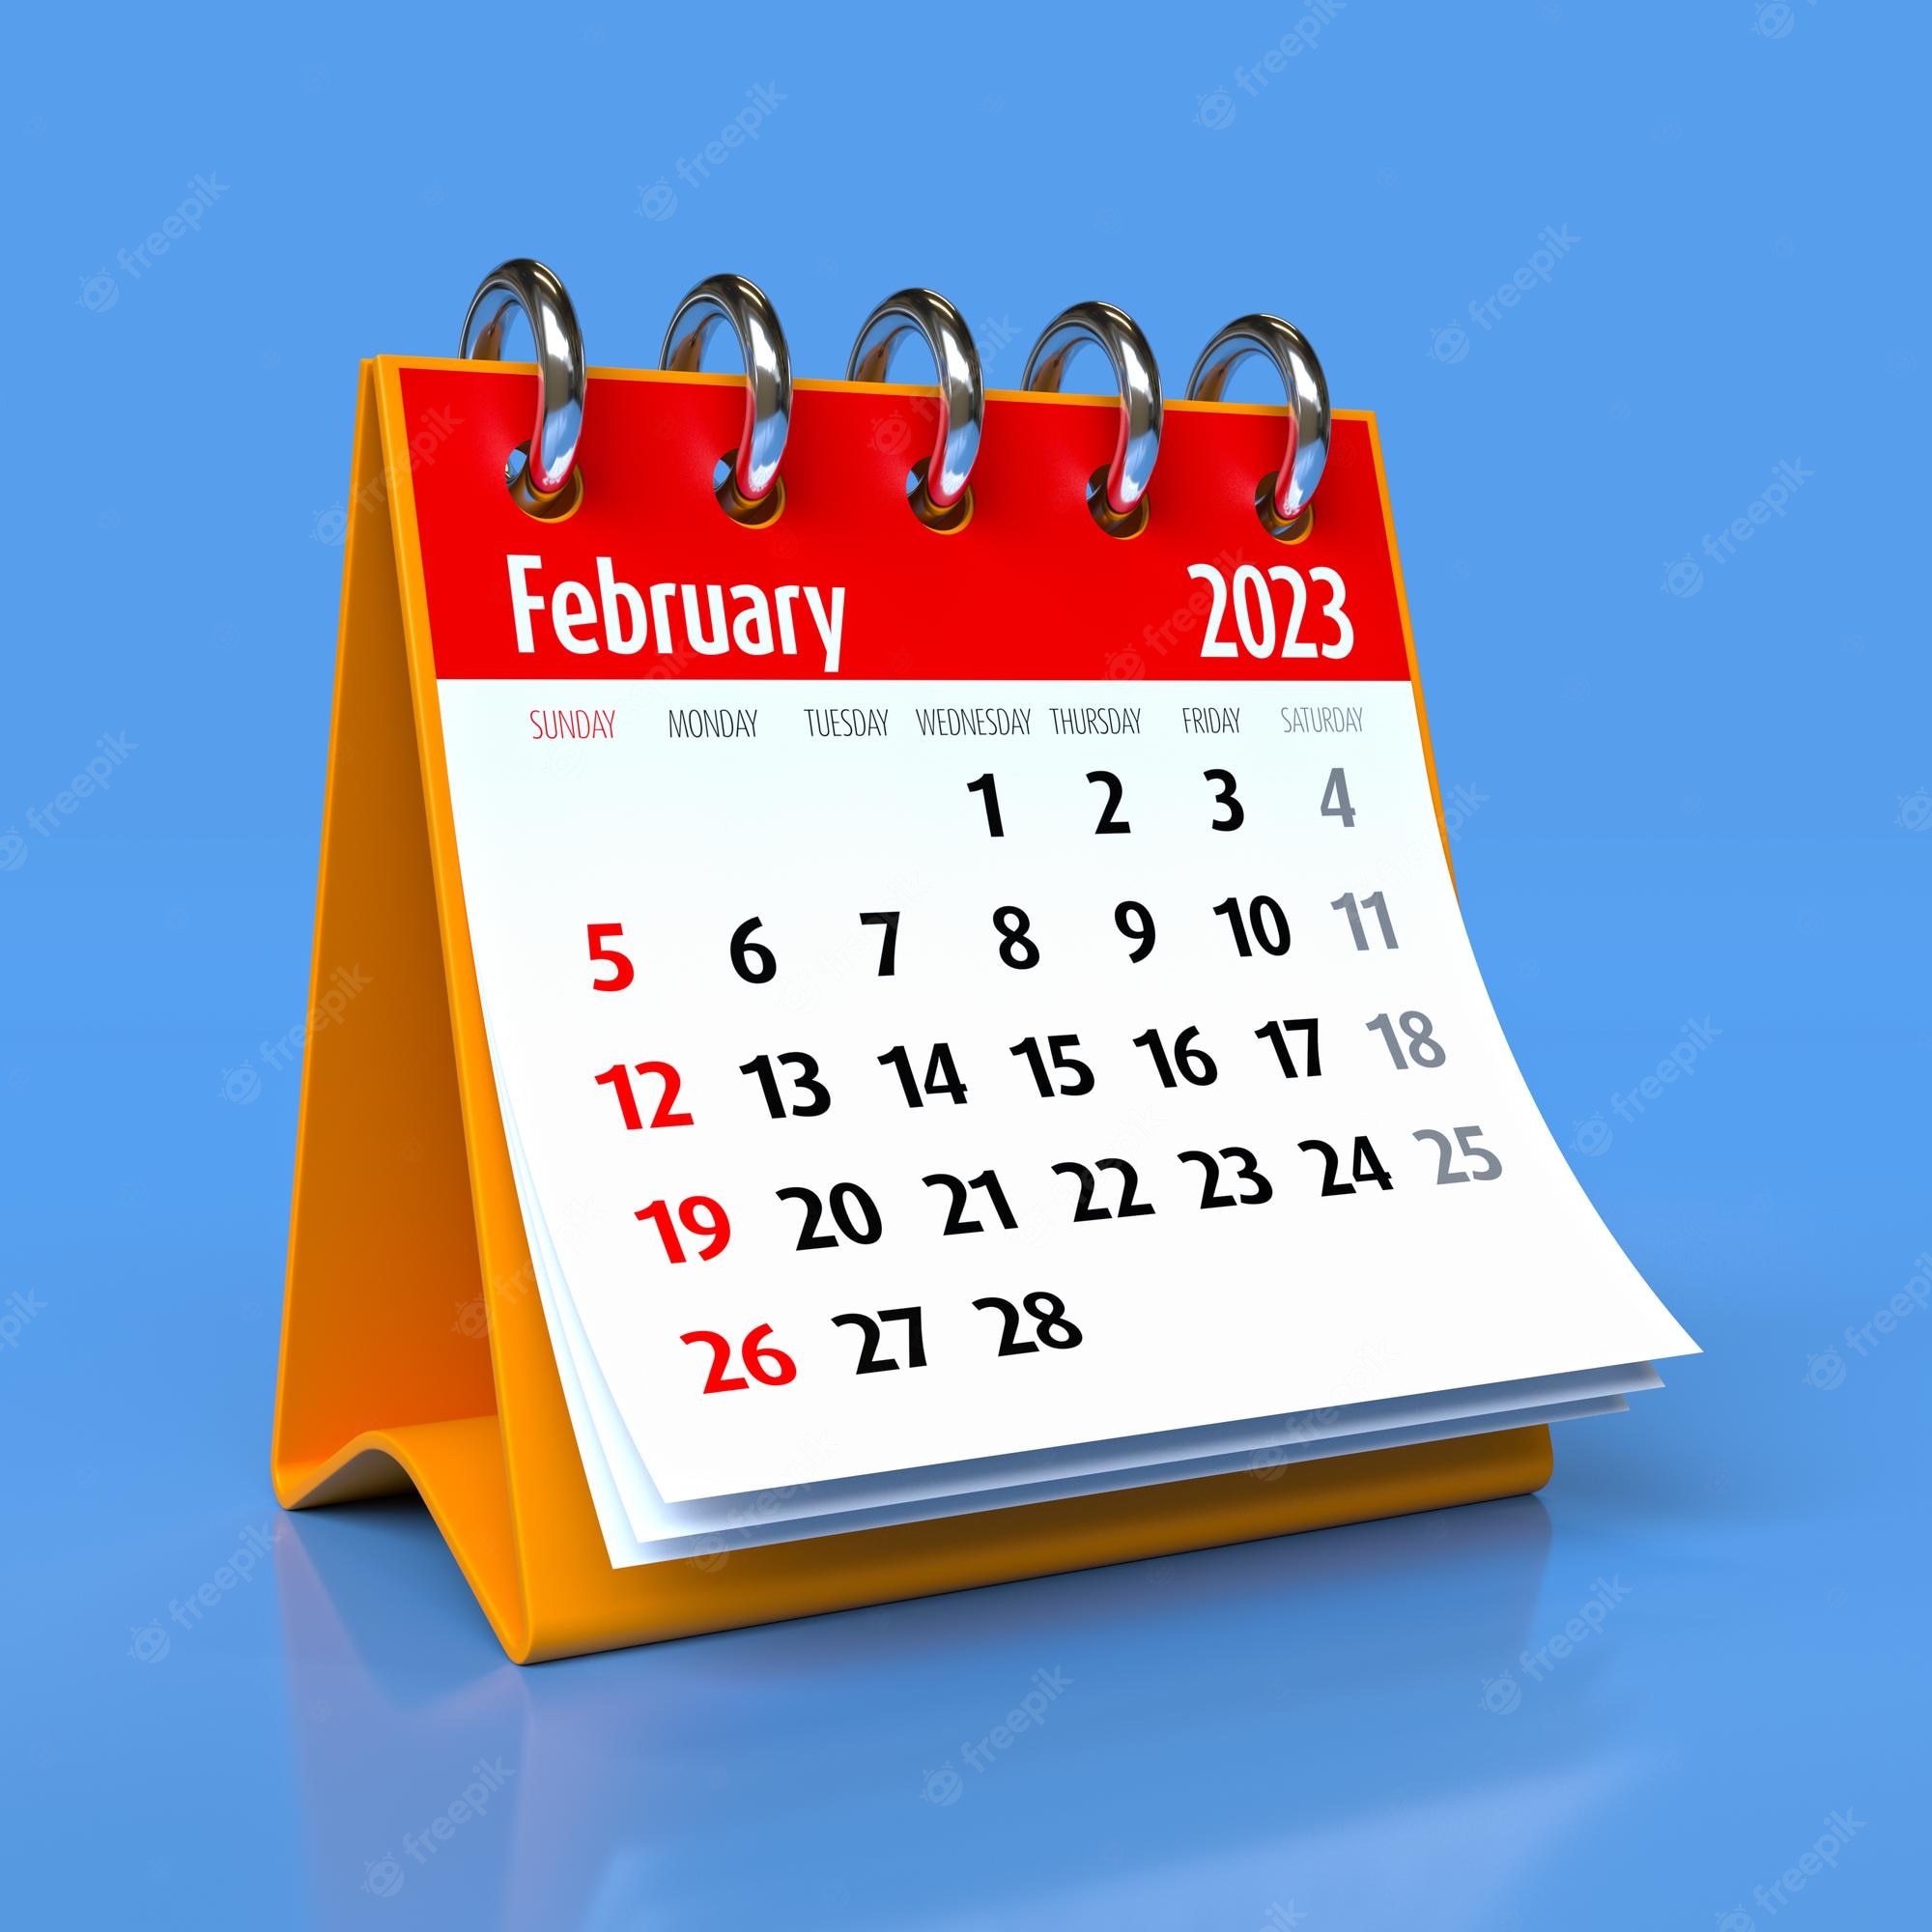 Free february calendar, Download Free february calendar png images